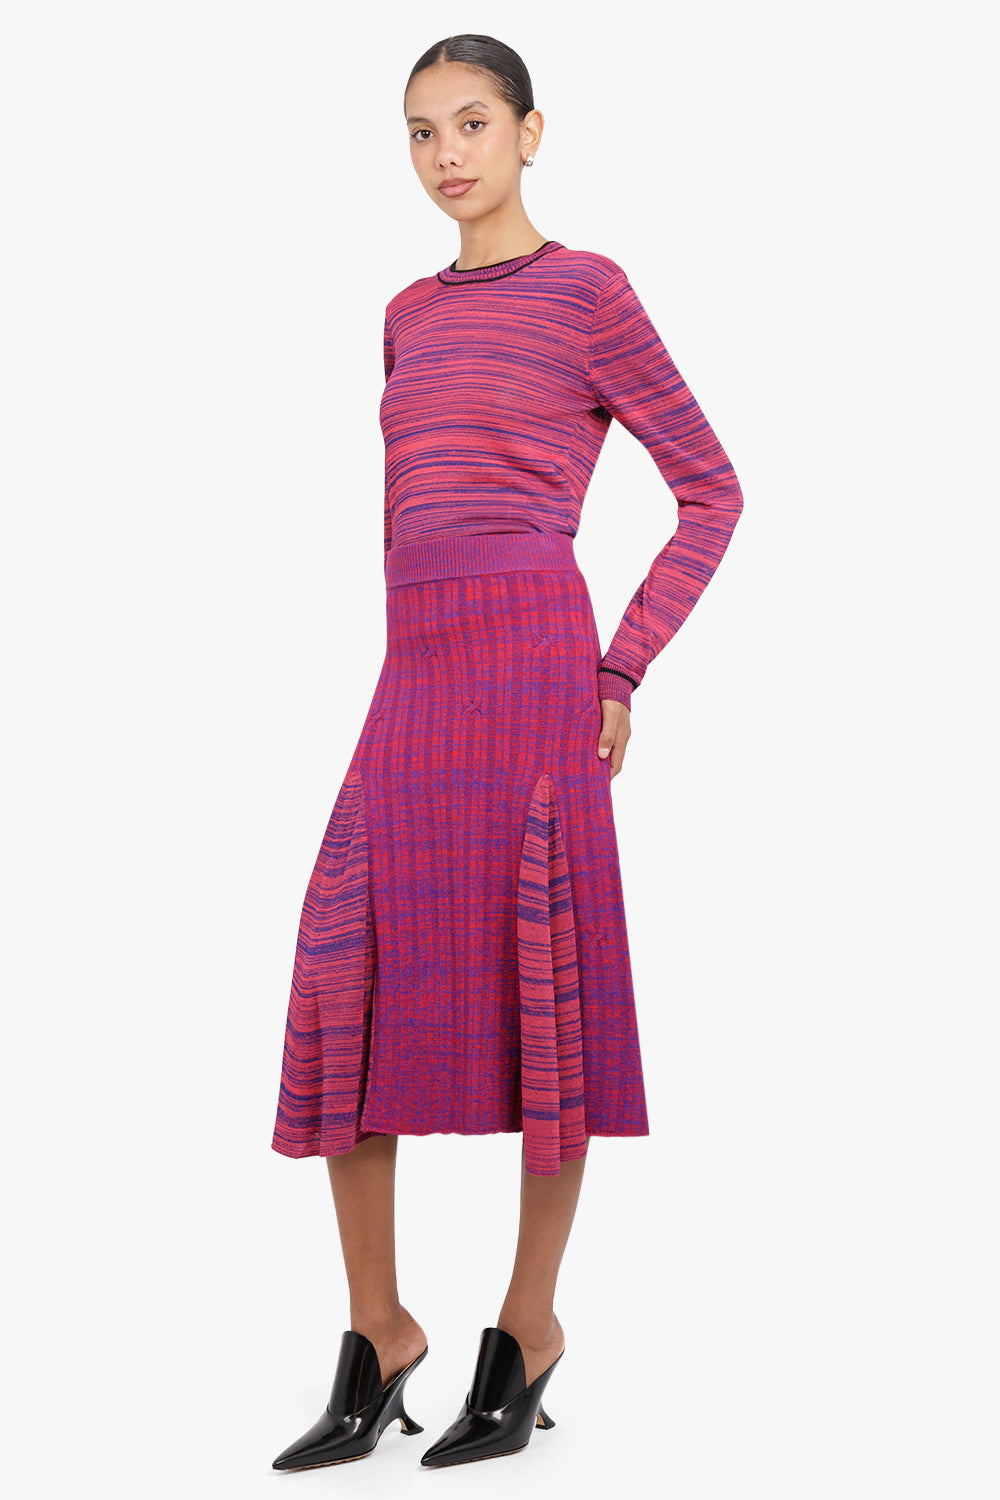 WALES BONNER RTW Nile Skirt | Navy/Red/Purple